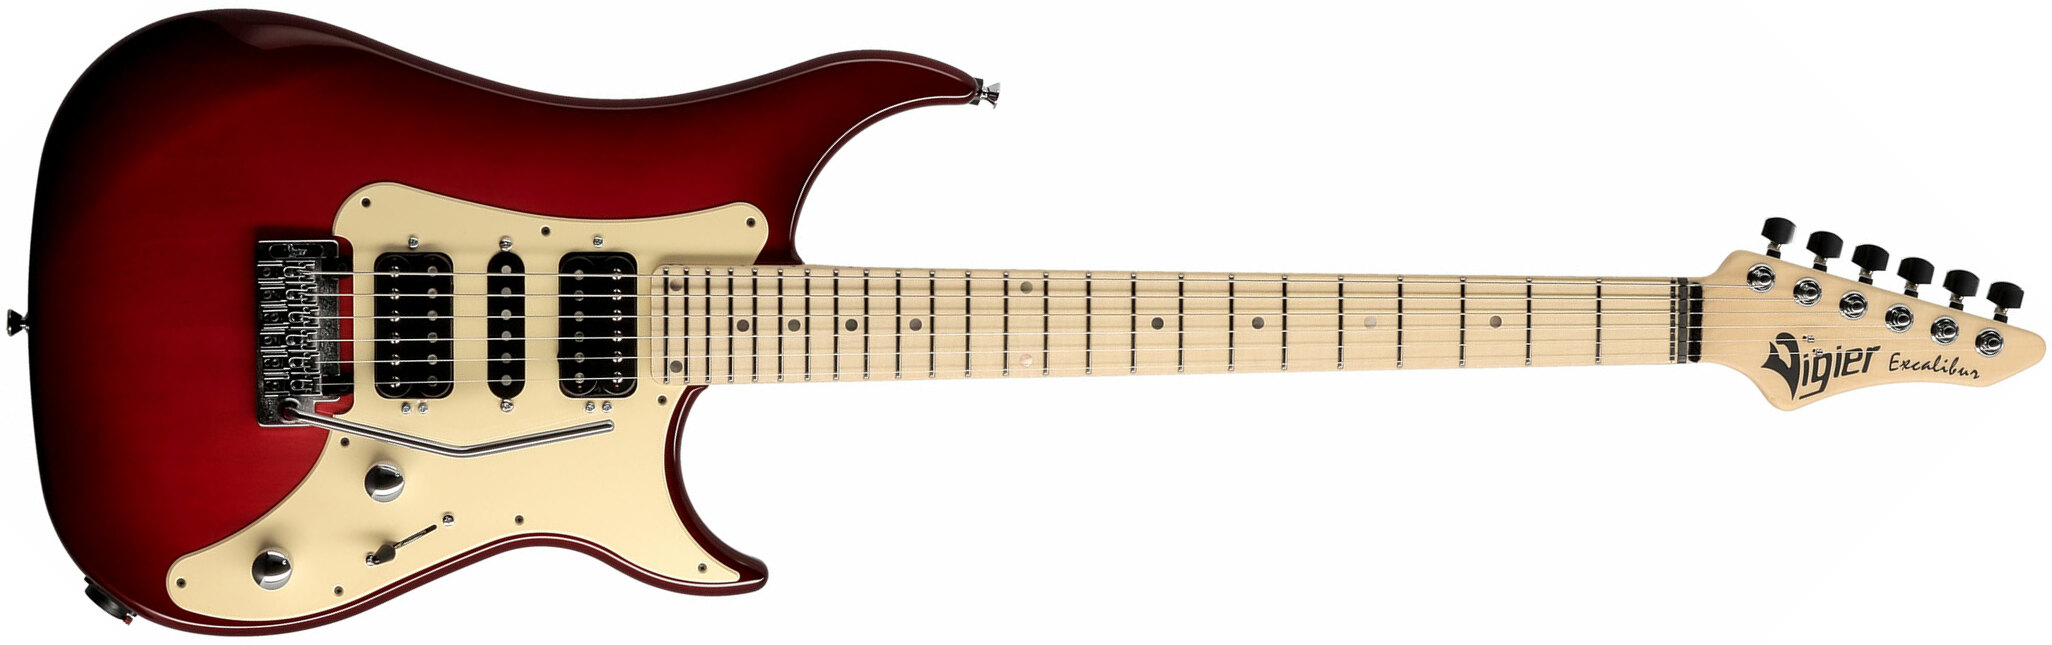 Vigier Excalibur Supraa Hsh Trem Mn - Clear Red - Str shape electric guitar - Main picture